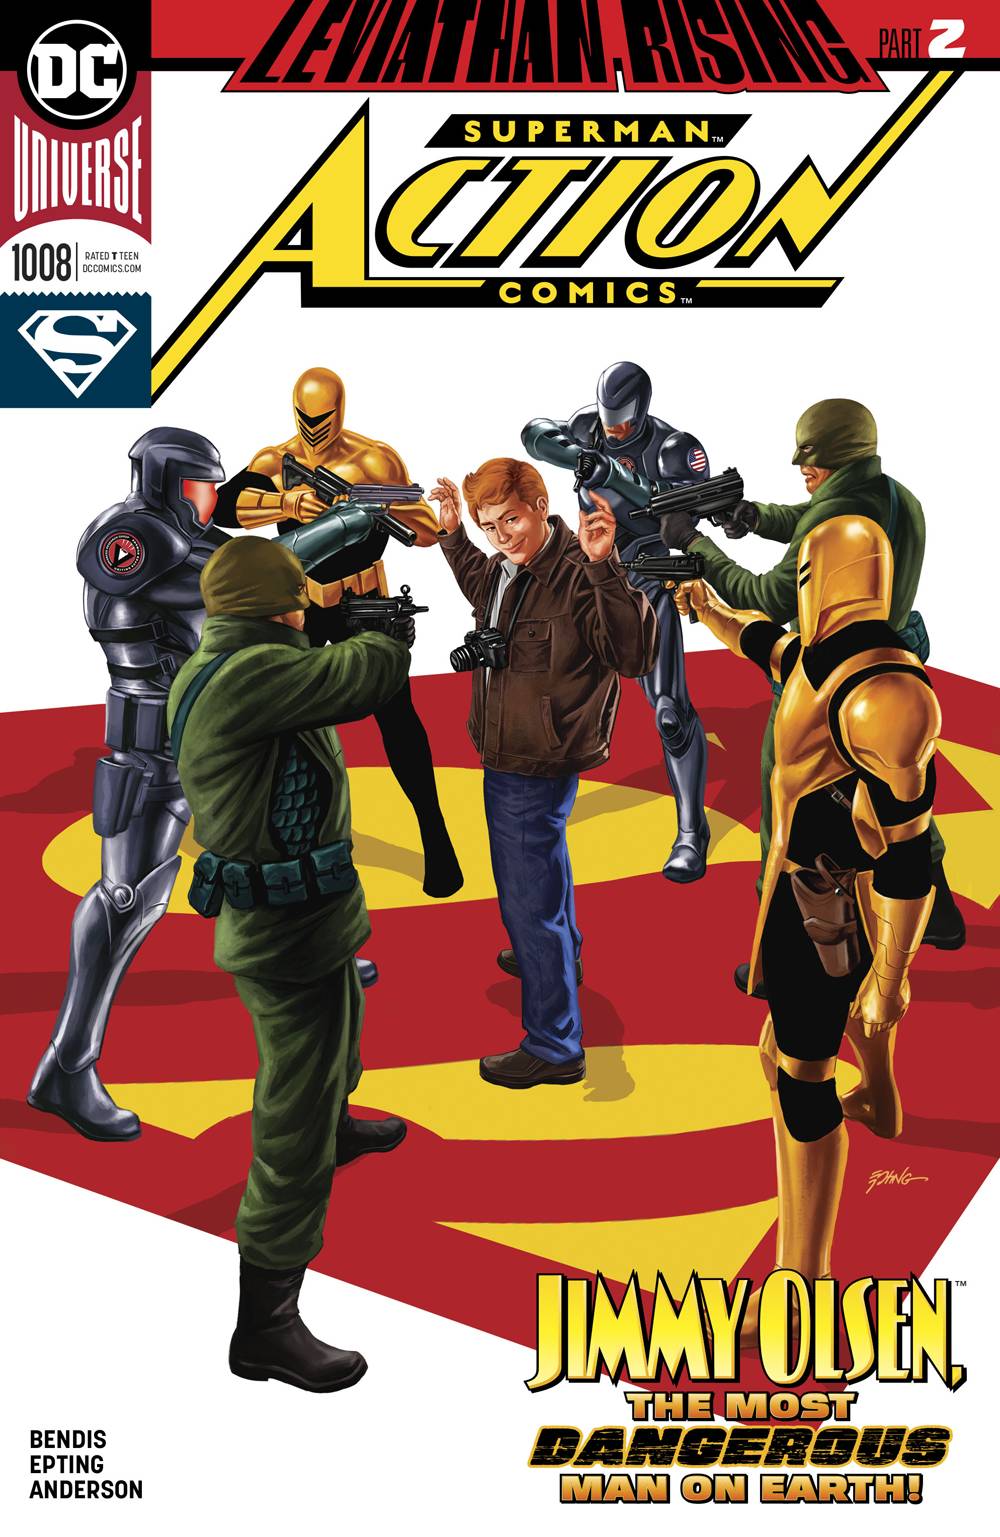 Action Comics 1008 Comic Book